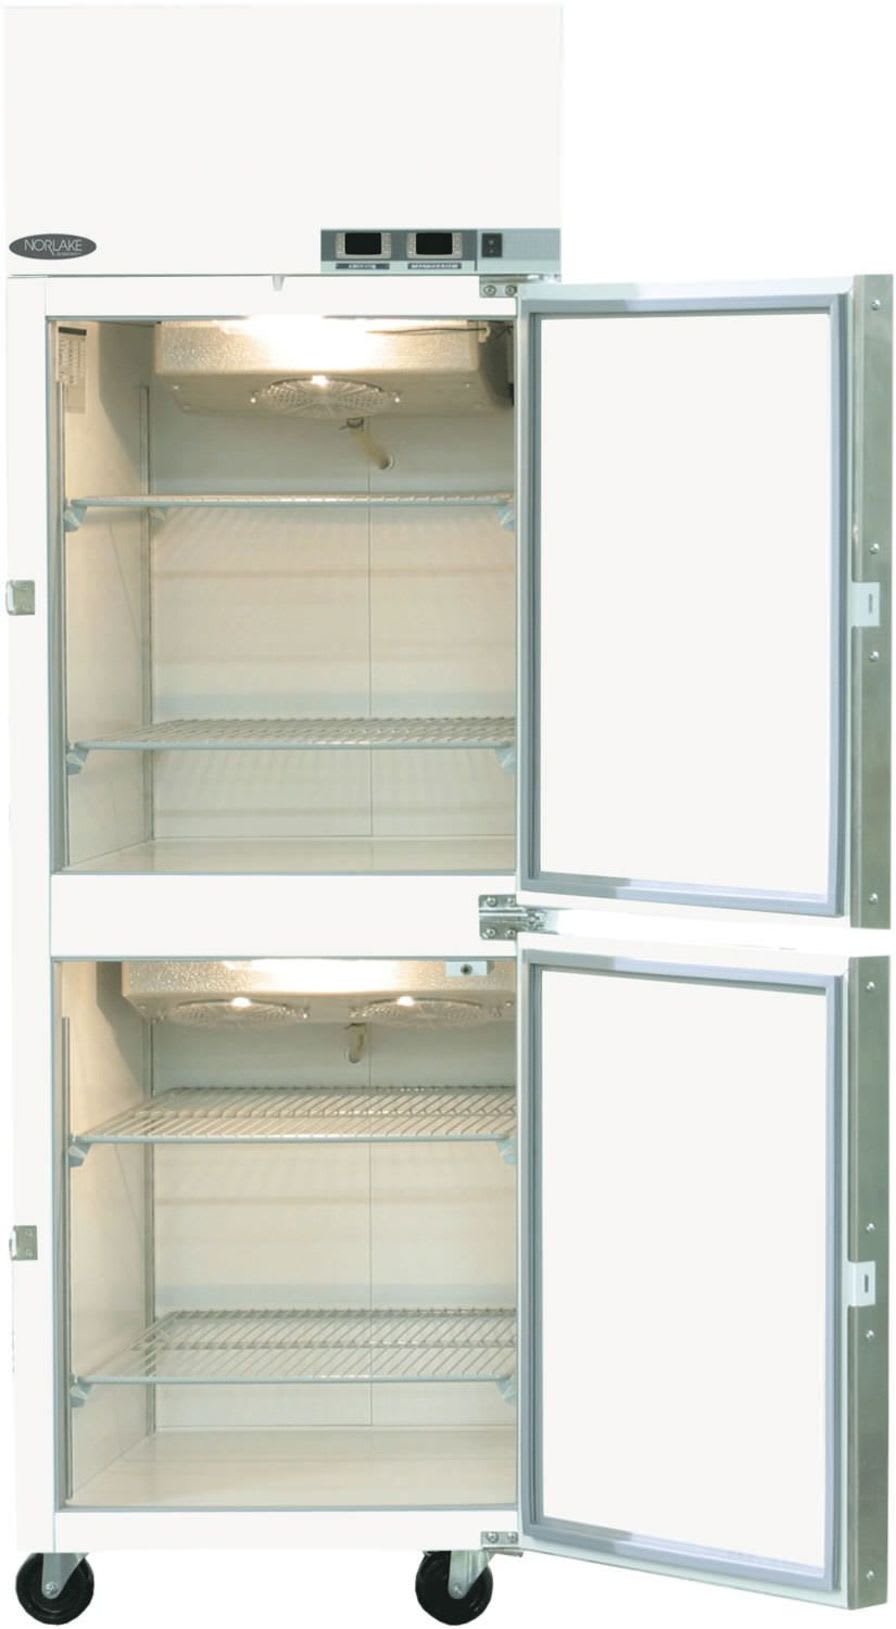 Laboratory refrigerator-freezer / upright / 2-door NSRF202 Norlake